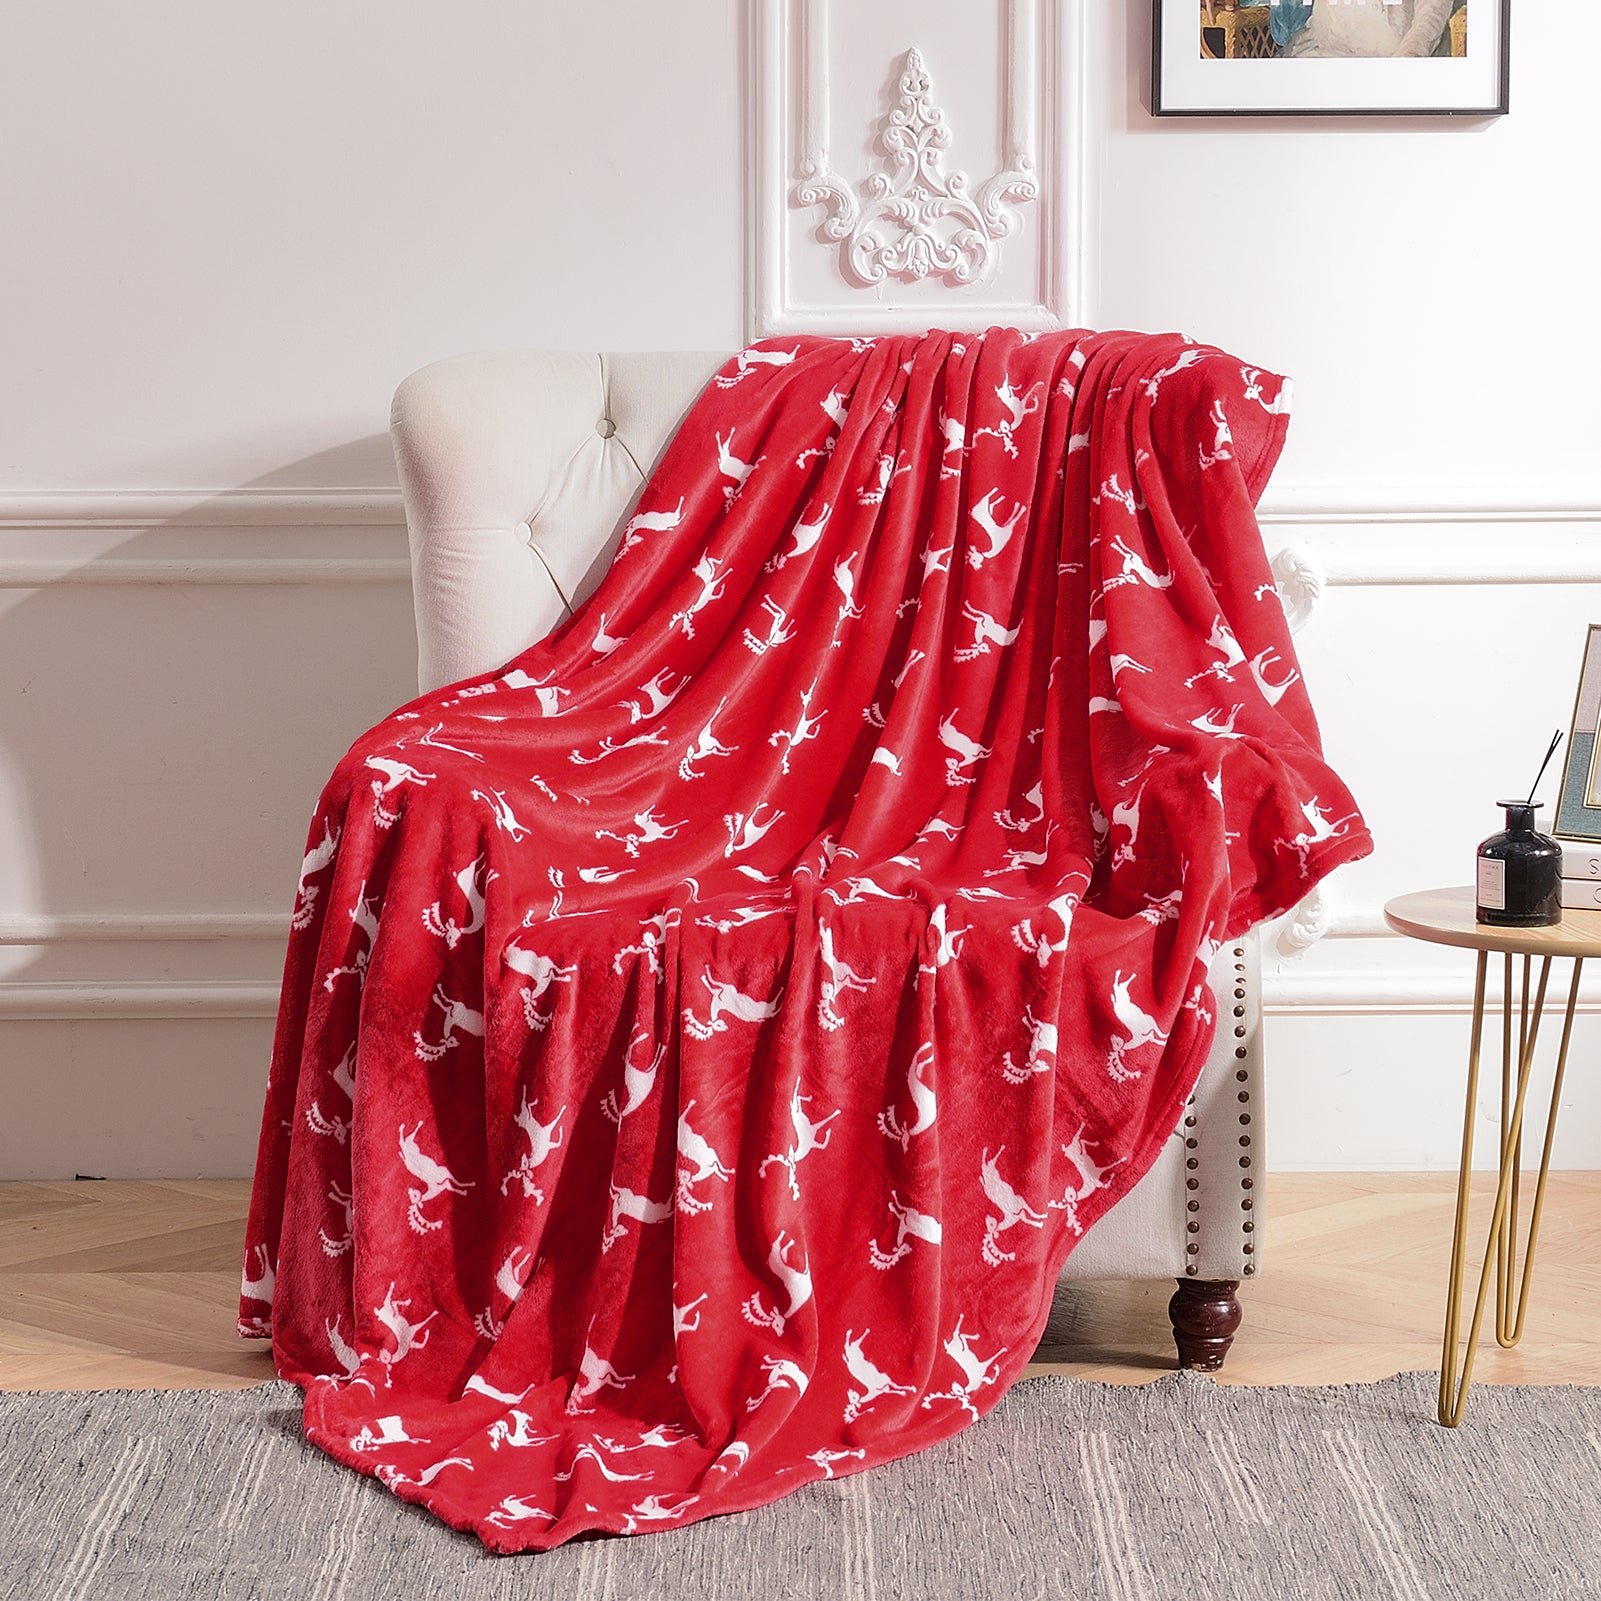 Flannel Fleece Throw Blanket for Christmas - Reindeer Print